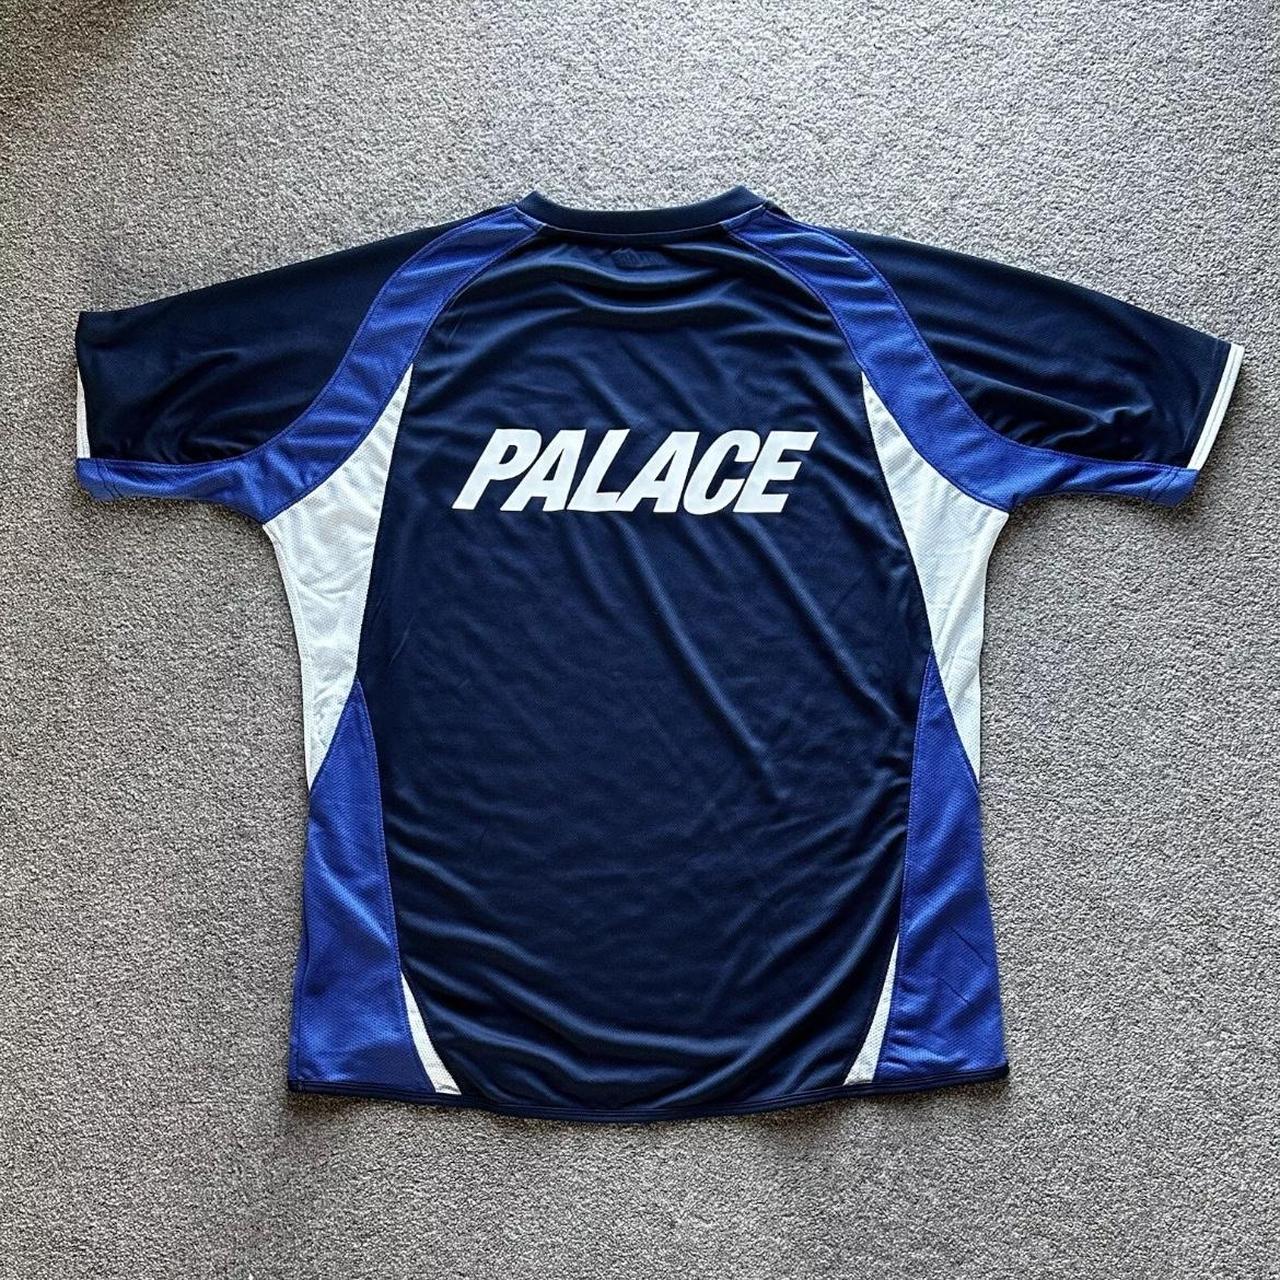 Palace Pro jersey | Medium Very lightly worn